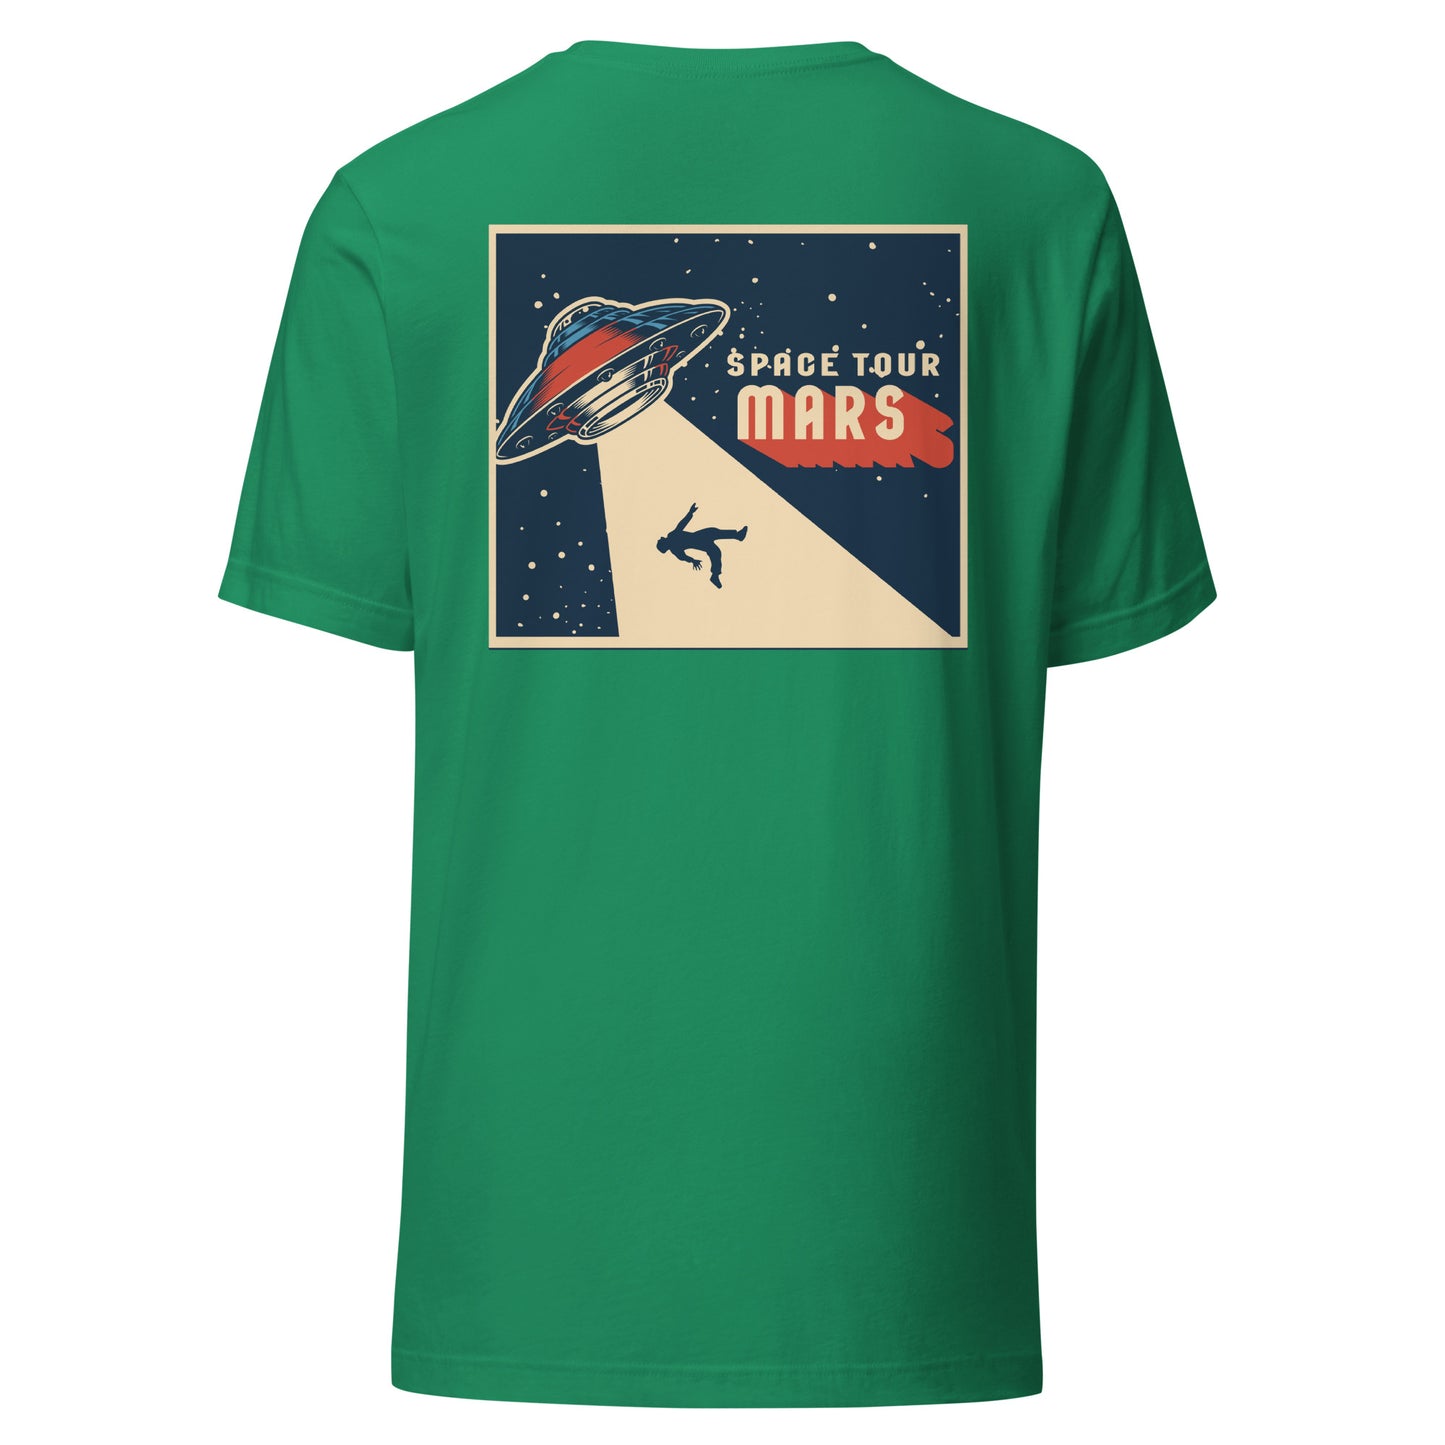 Space Tour Mars T-shirt